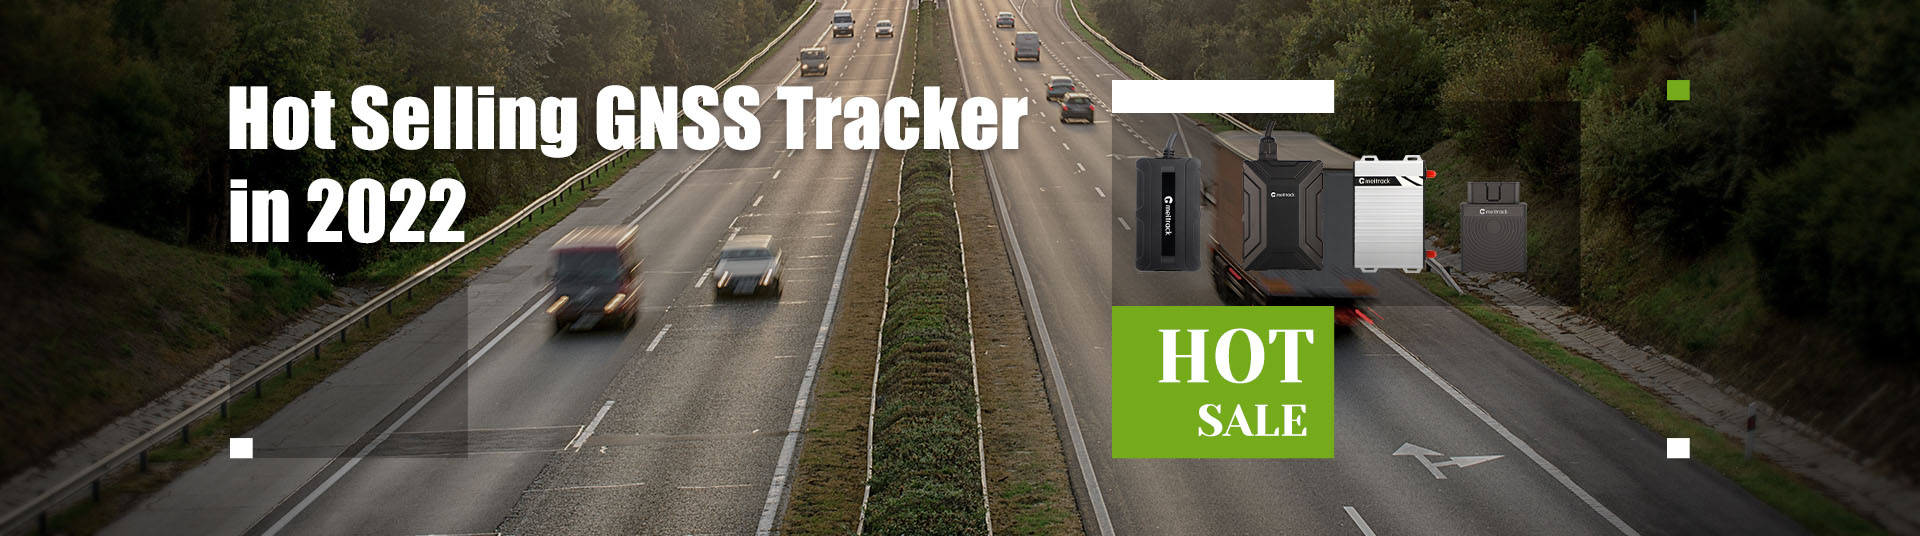 hot-selling-tracker